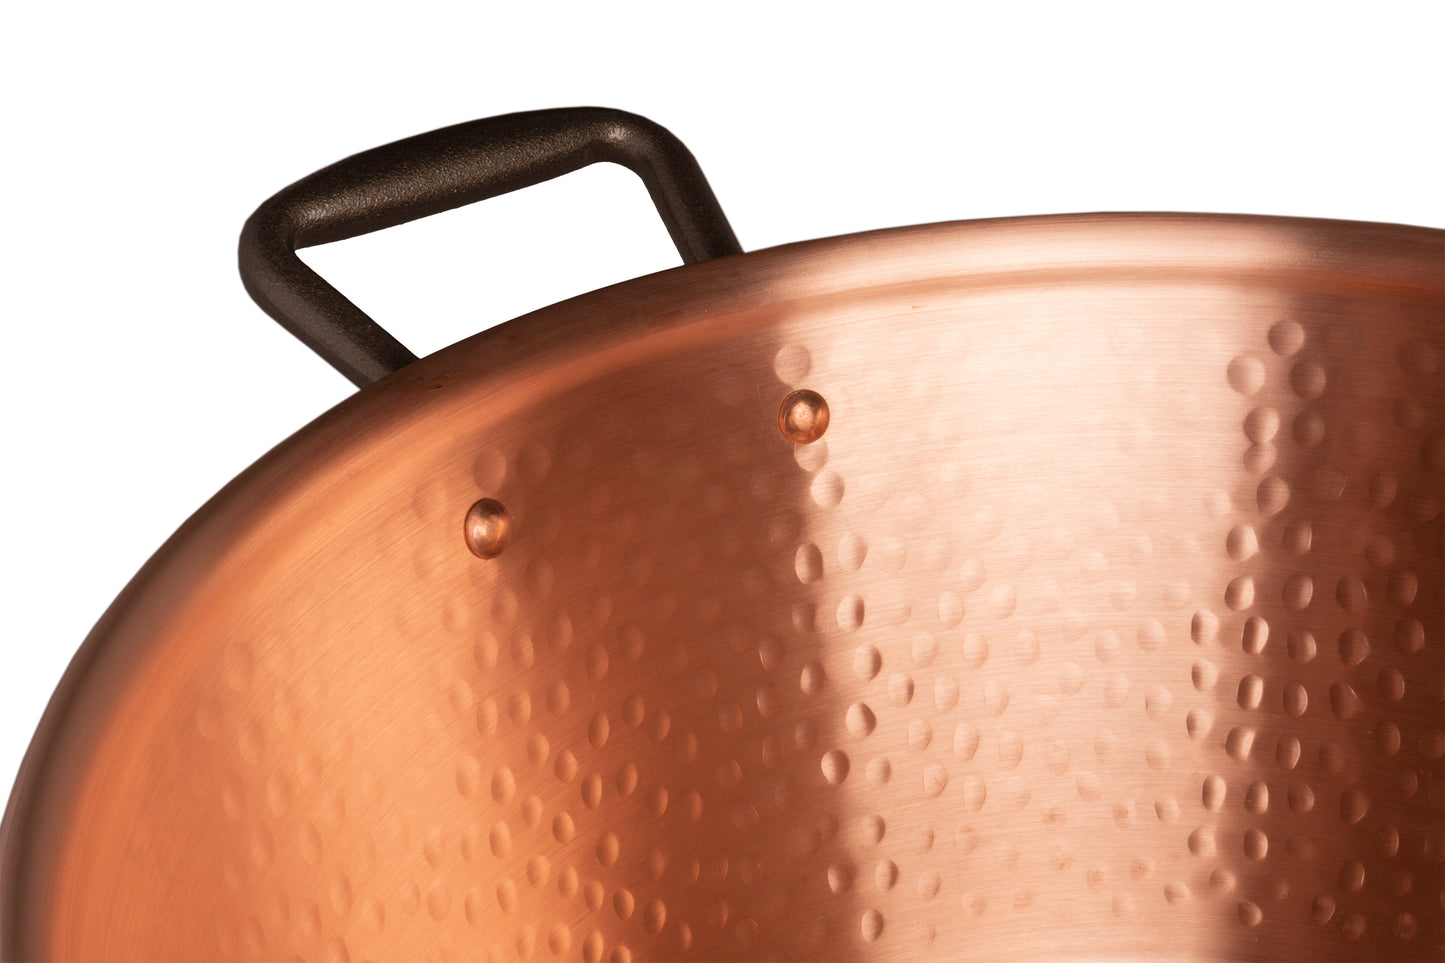 Copper jam pot for induction stoves with cast iron handles, 12.5 qt